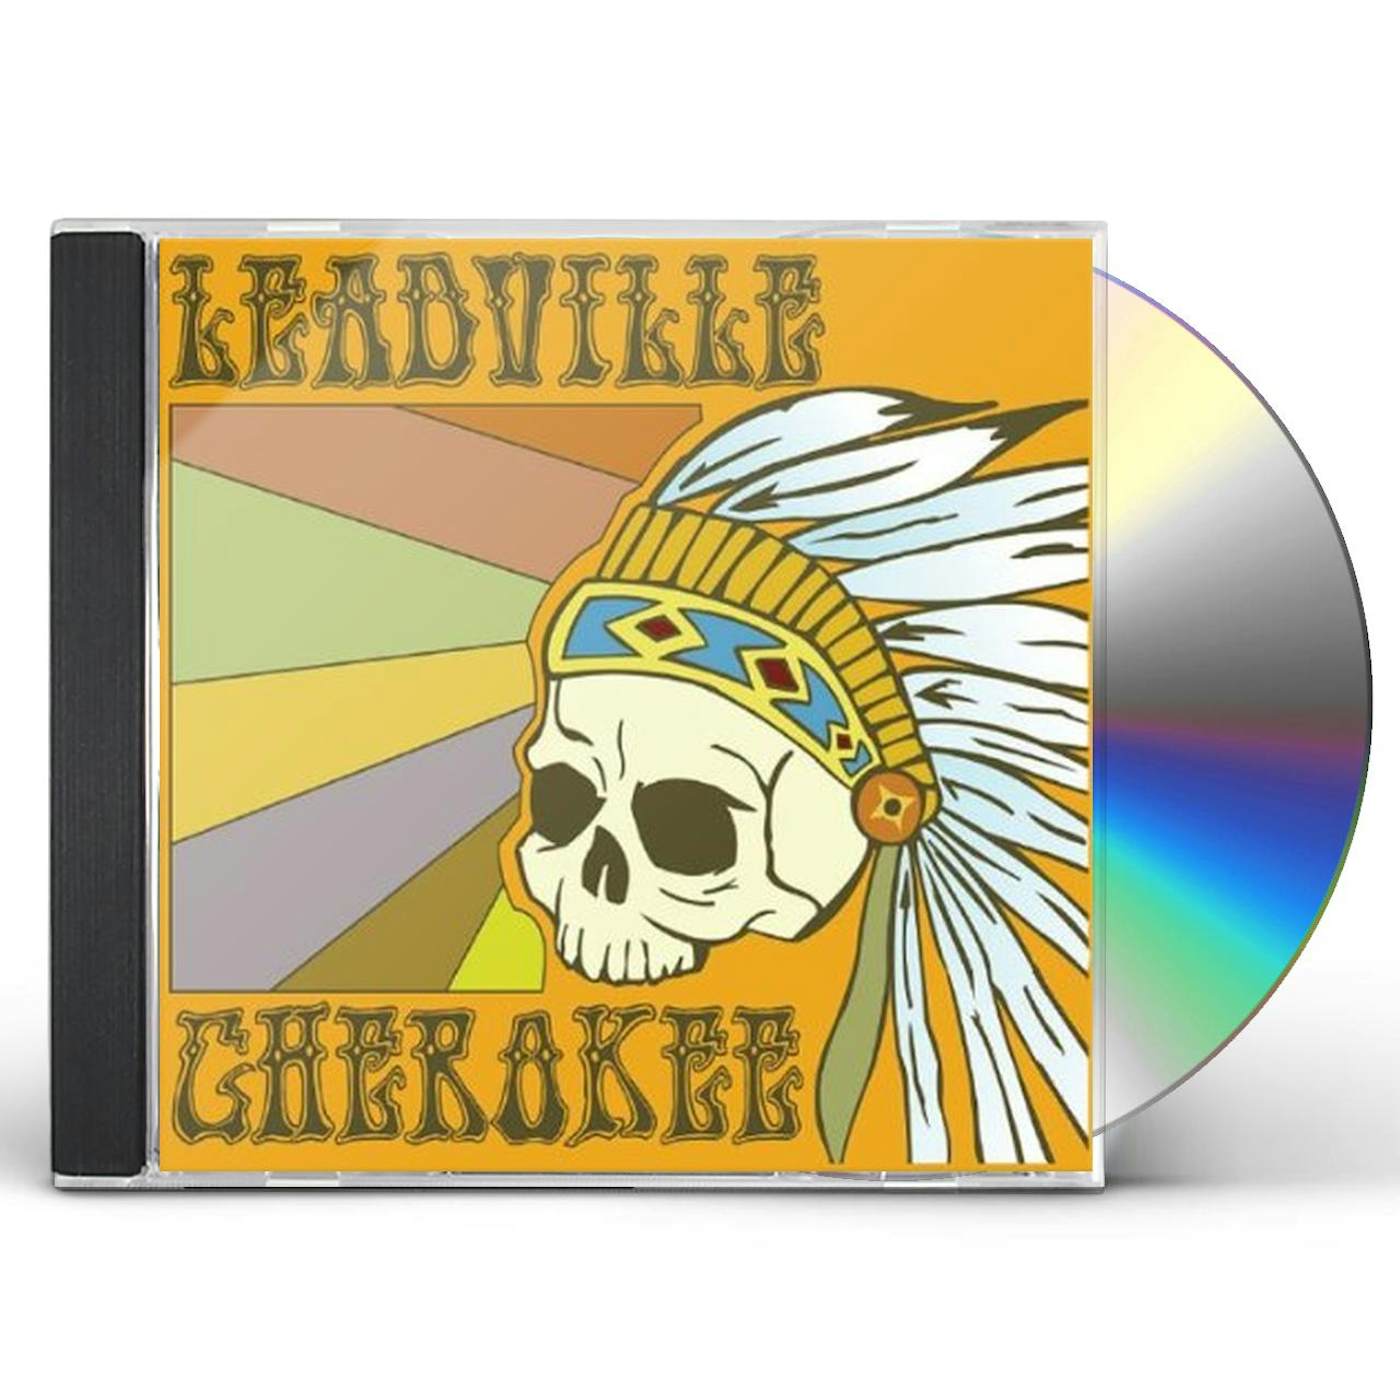 LEADVILLE CHEROKEE CD